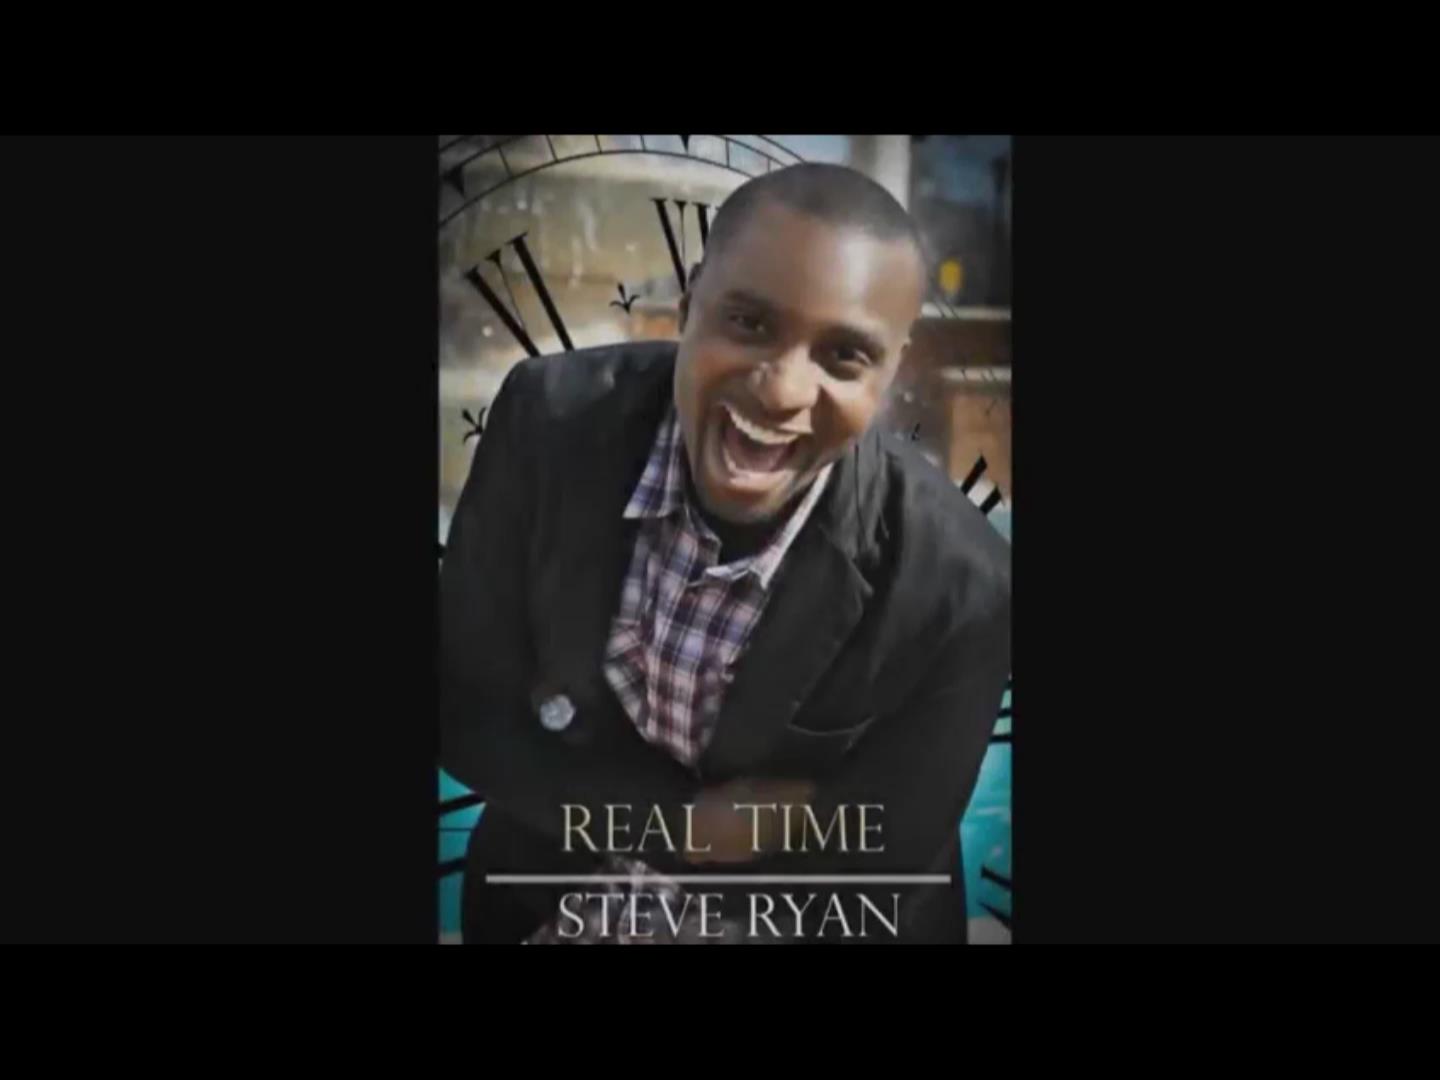  Steve Ryan – “Real Time”